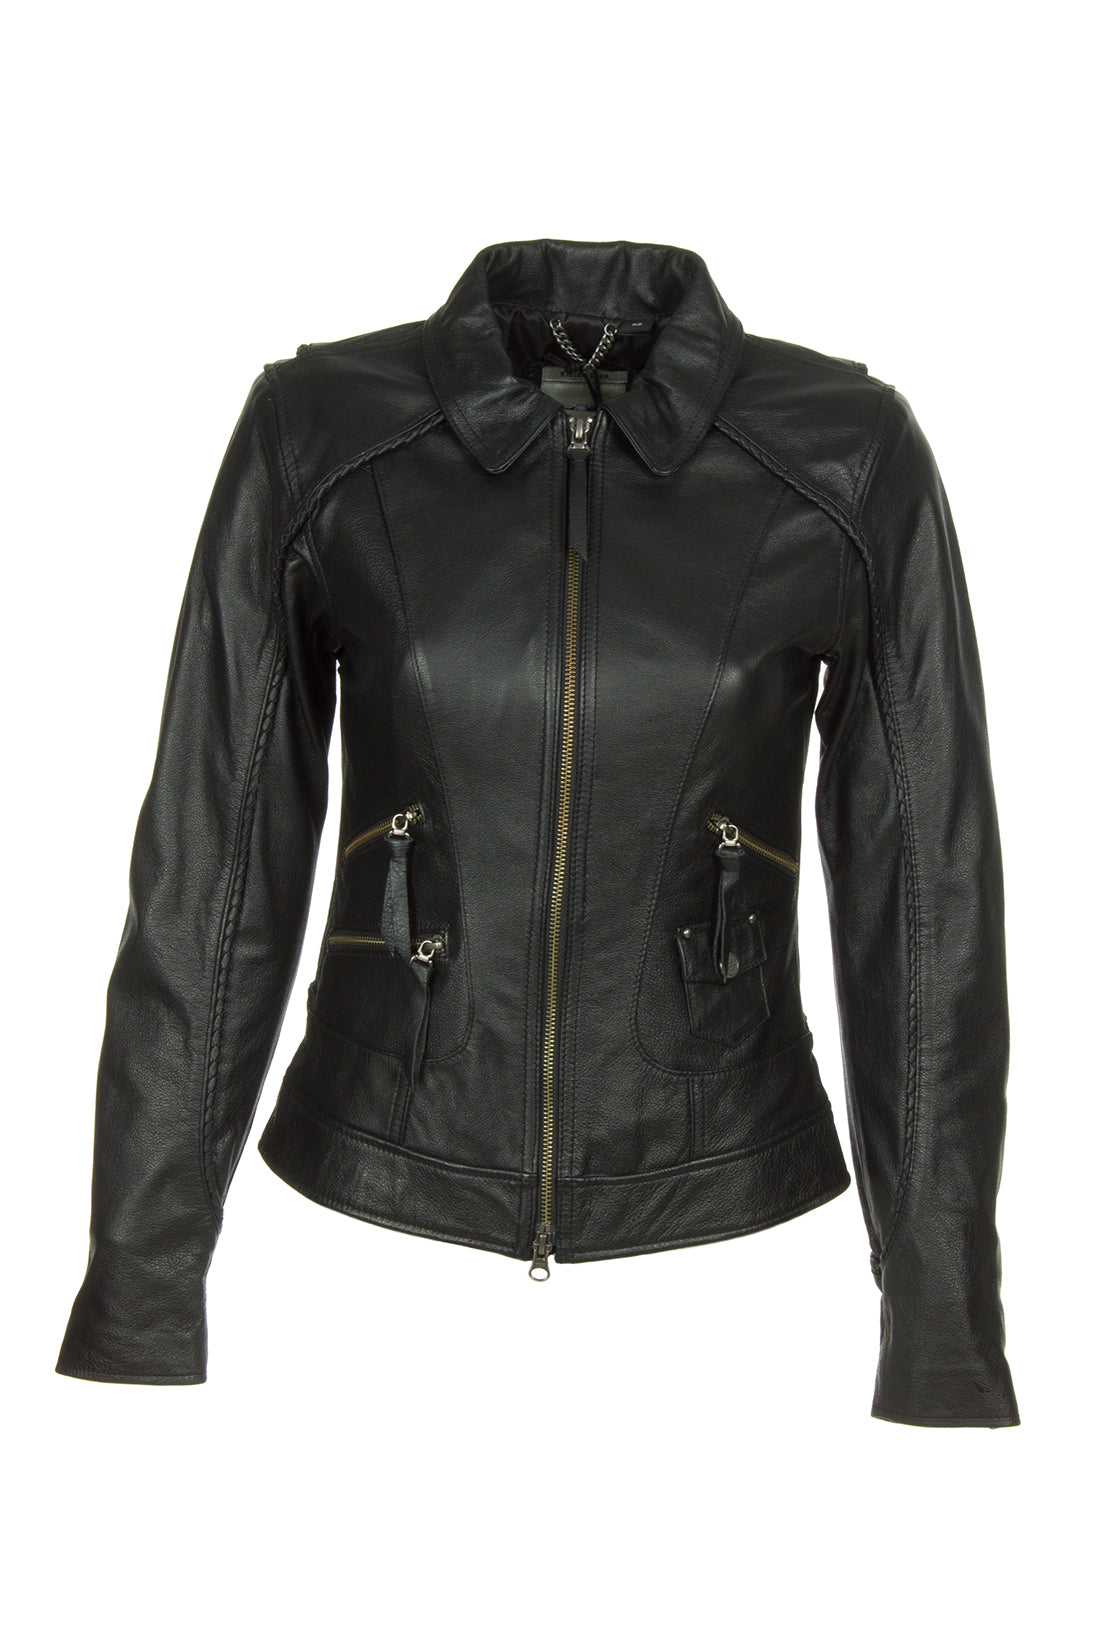 Harley-Davidson 98064-13VW Womens Heritage Black Leather Jacket